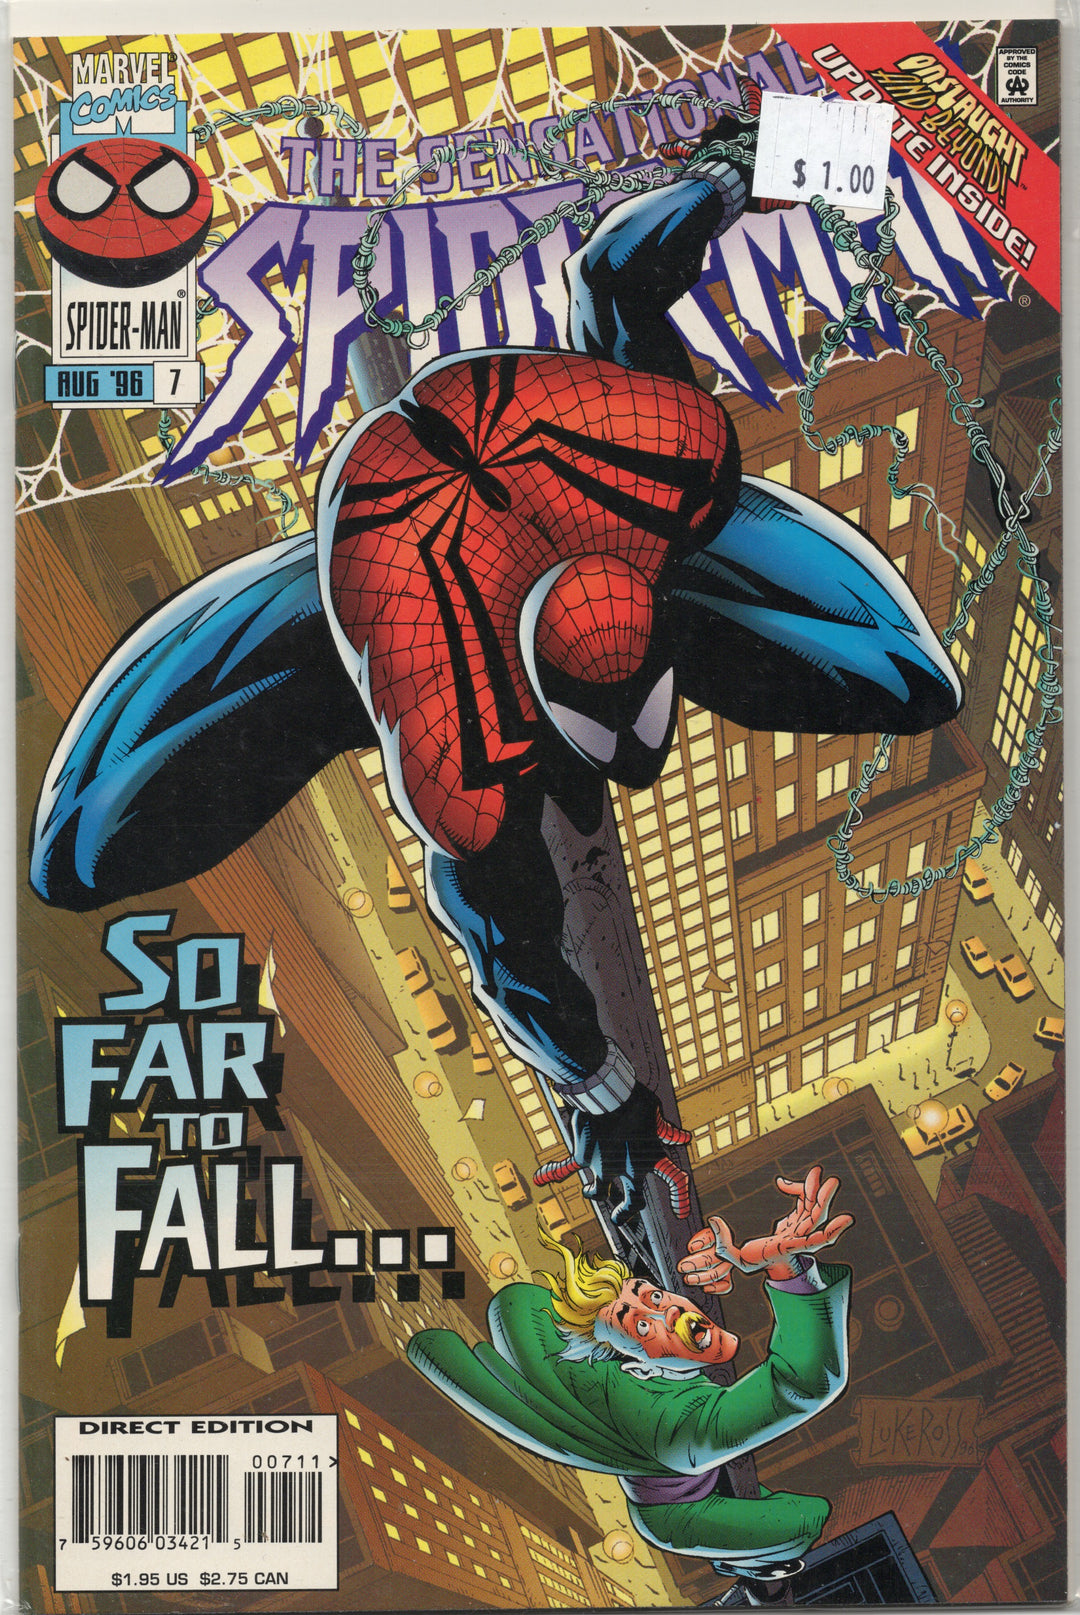 The Sensational Spiderman #7